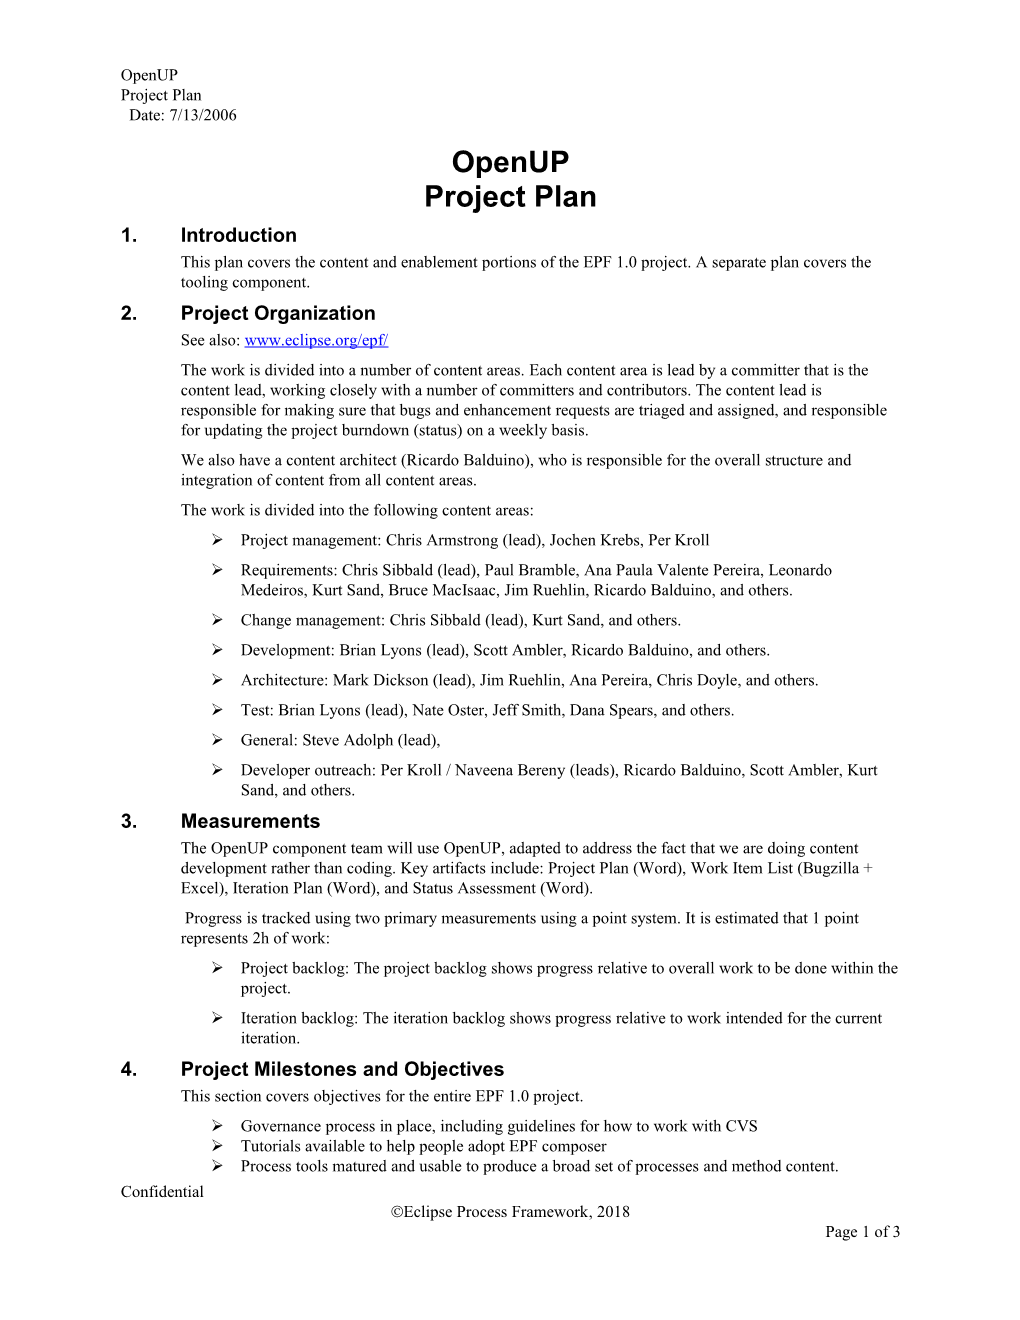 2. Project Organization